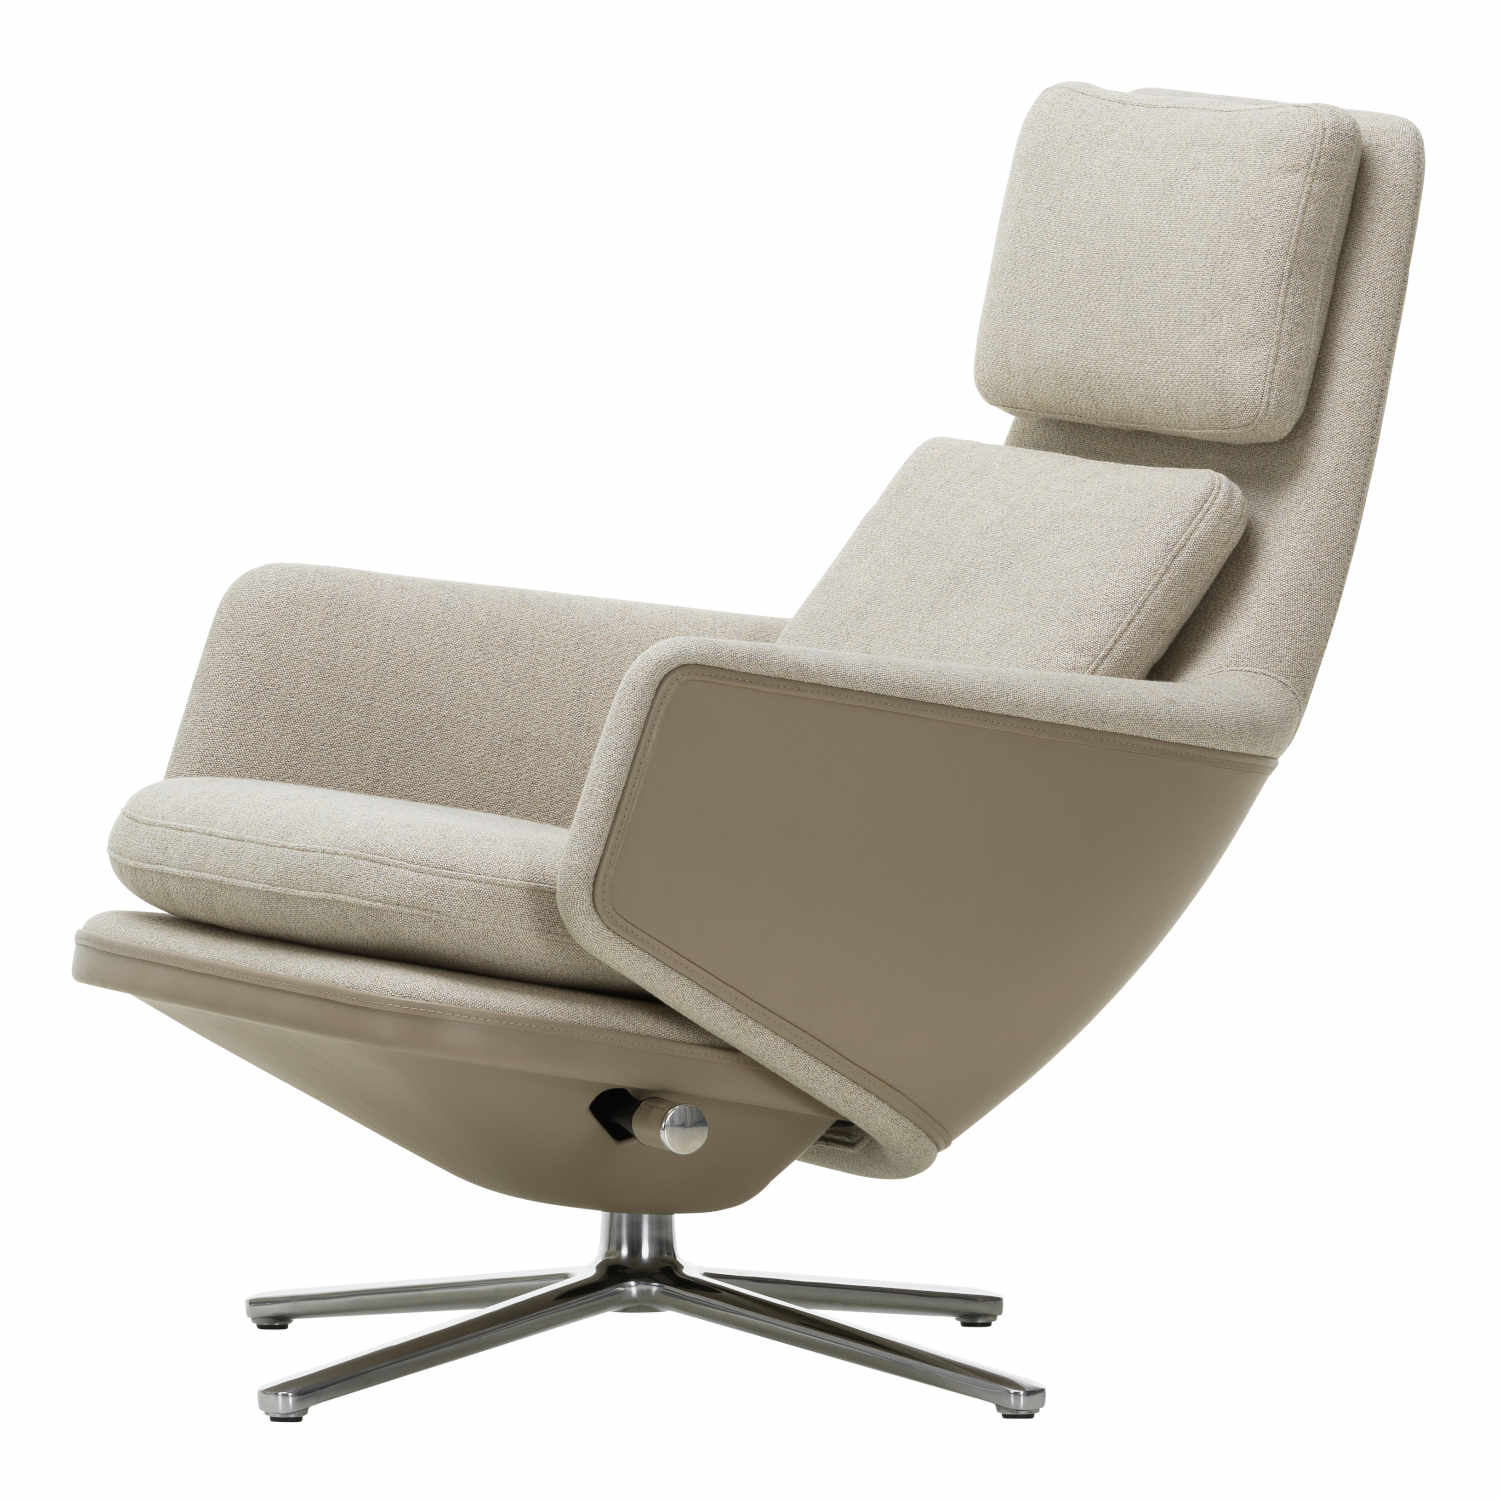 Grand Relax Fabric Sessel, Sitzhöhe 46,5 cm, Bezug stoff dumet beige/grau, Lederbezug forte decor chocolate, Untergestell aluminium poliert von Vitra